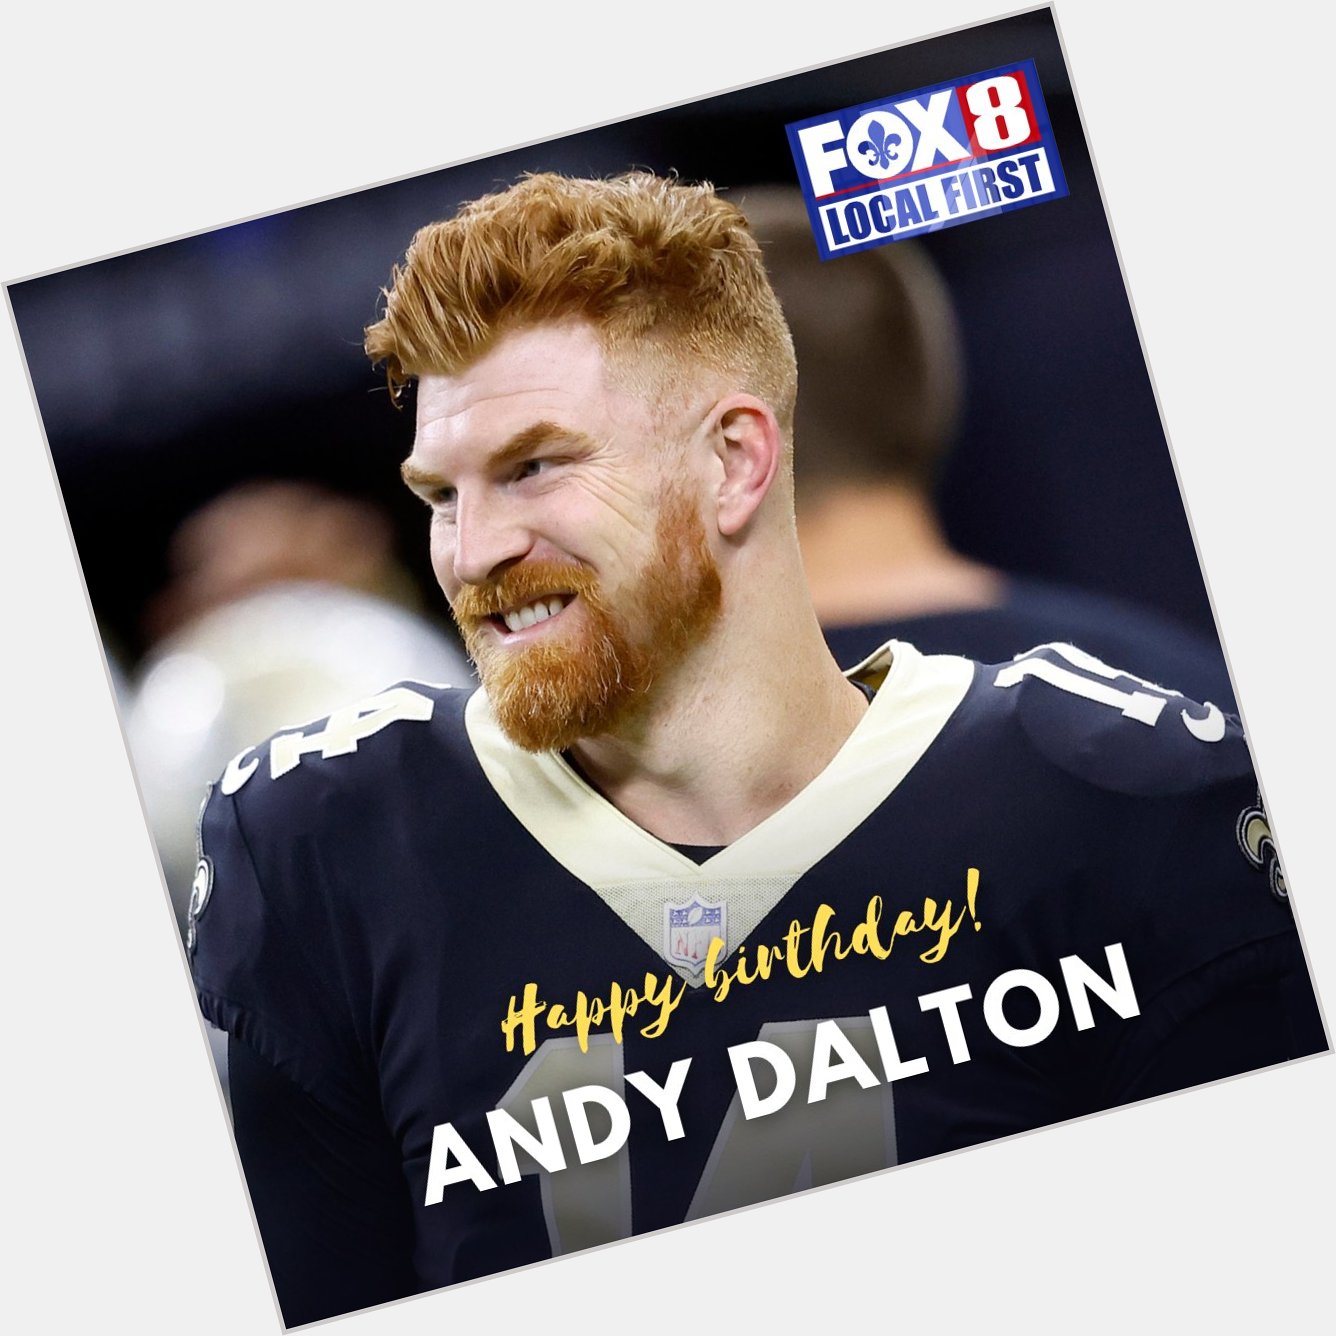 Happy birthday Andy Dalton!  